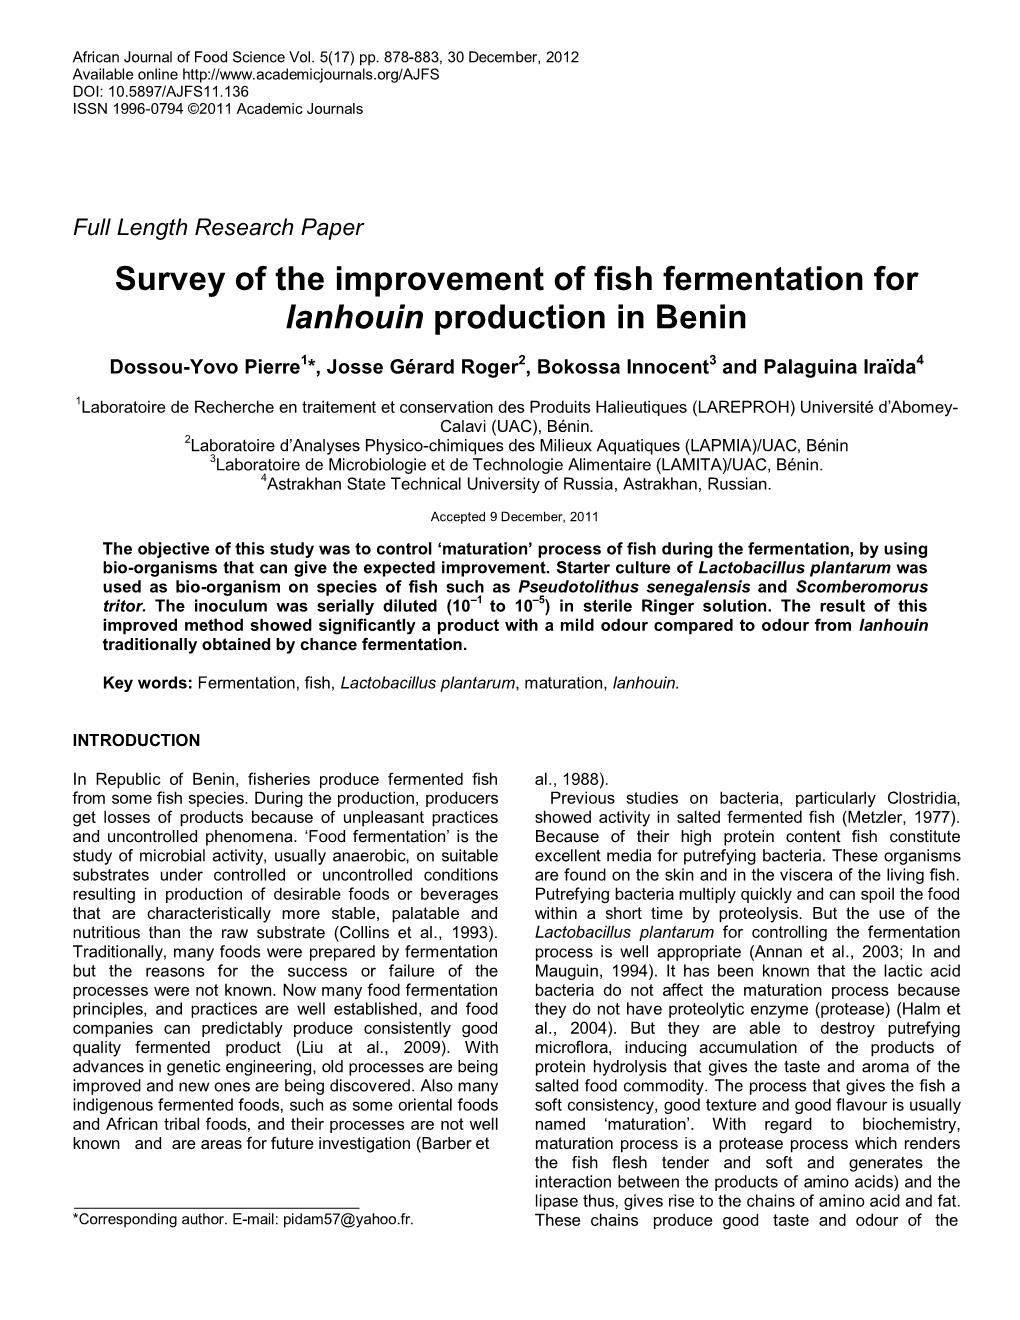 Survey of the Improvement of Fish Fermentation for Lanhouin Production in Benin